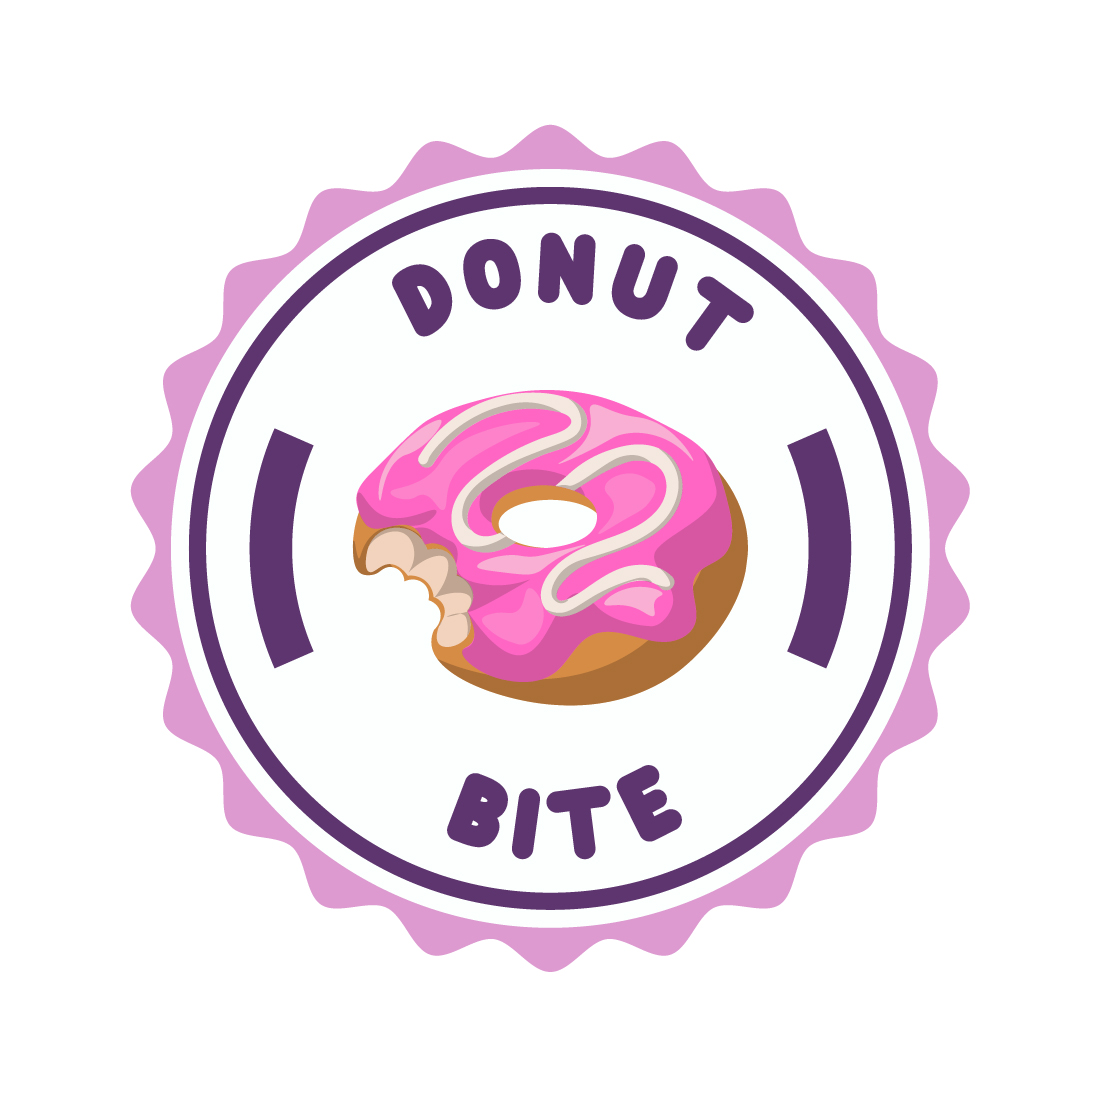 donut bite logo 2 01 580